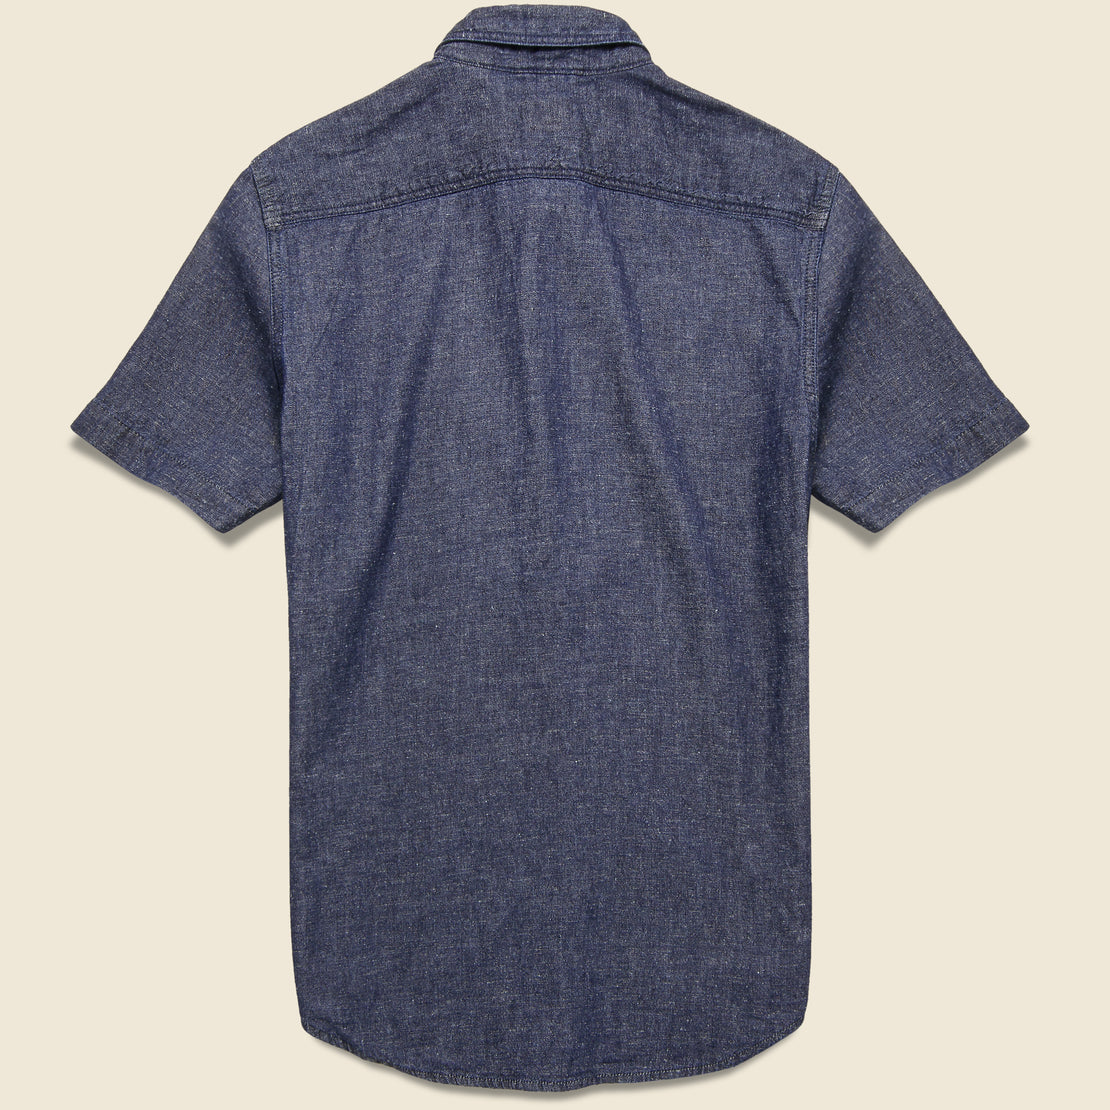 Sunset 1-Pocket Standard Shirt - Hemp Rinse